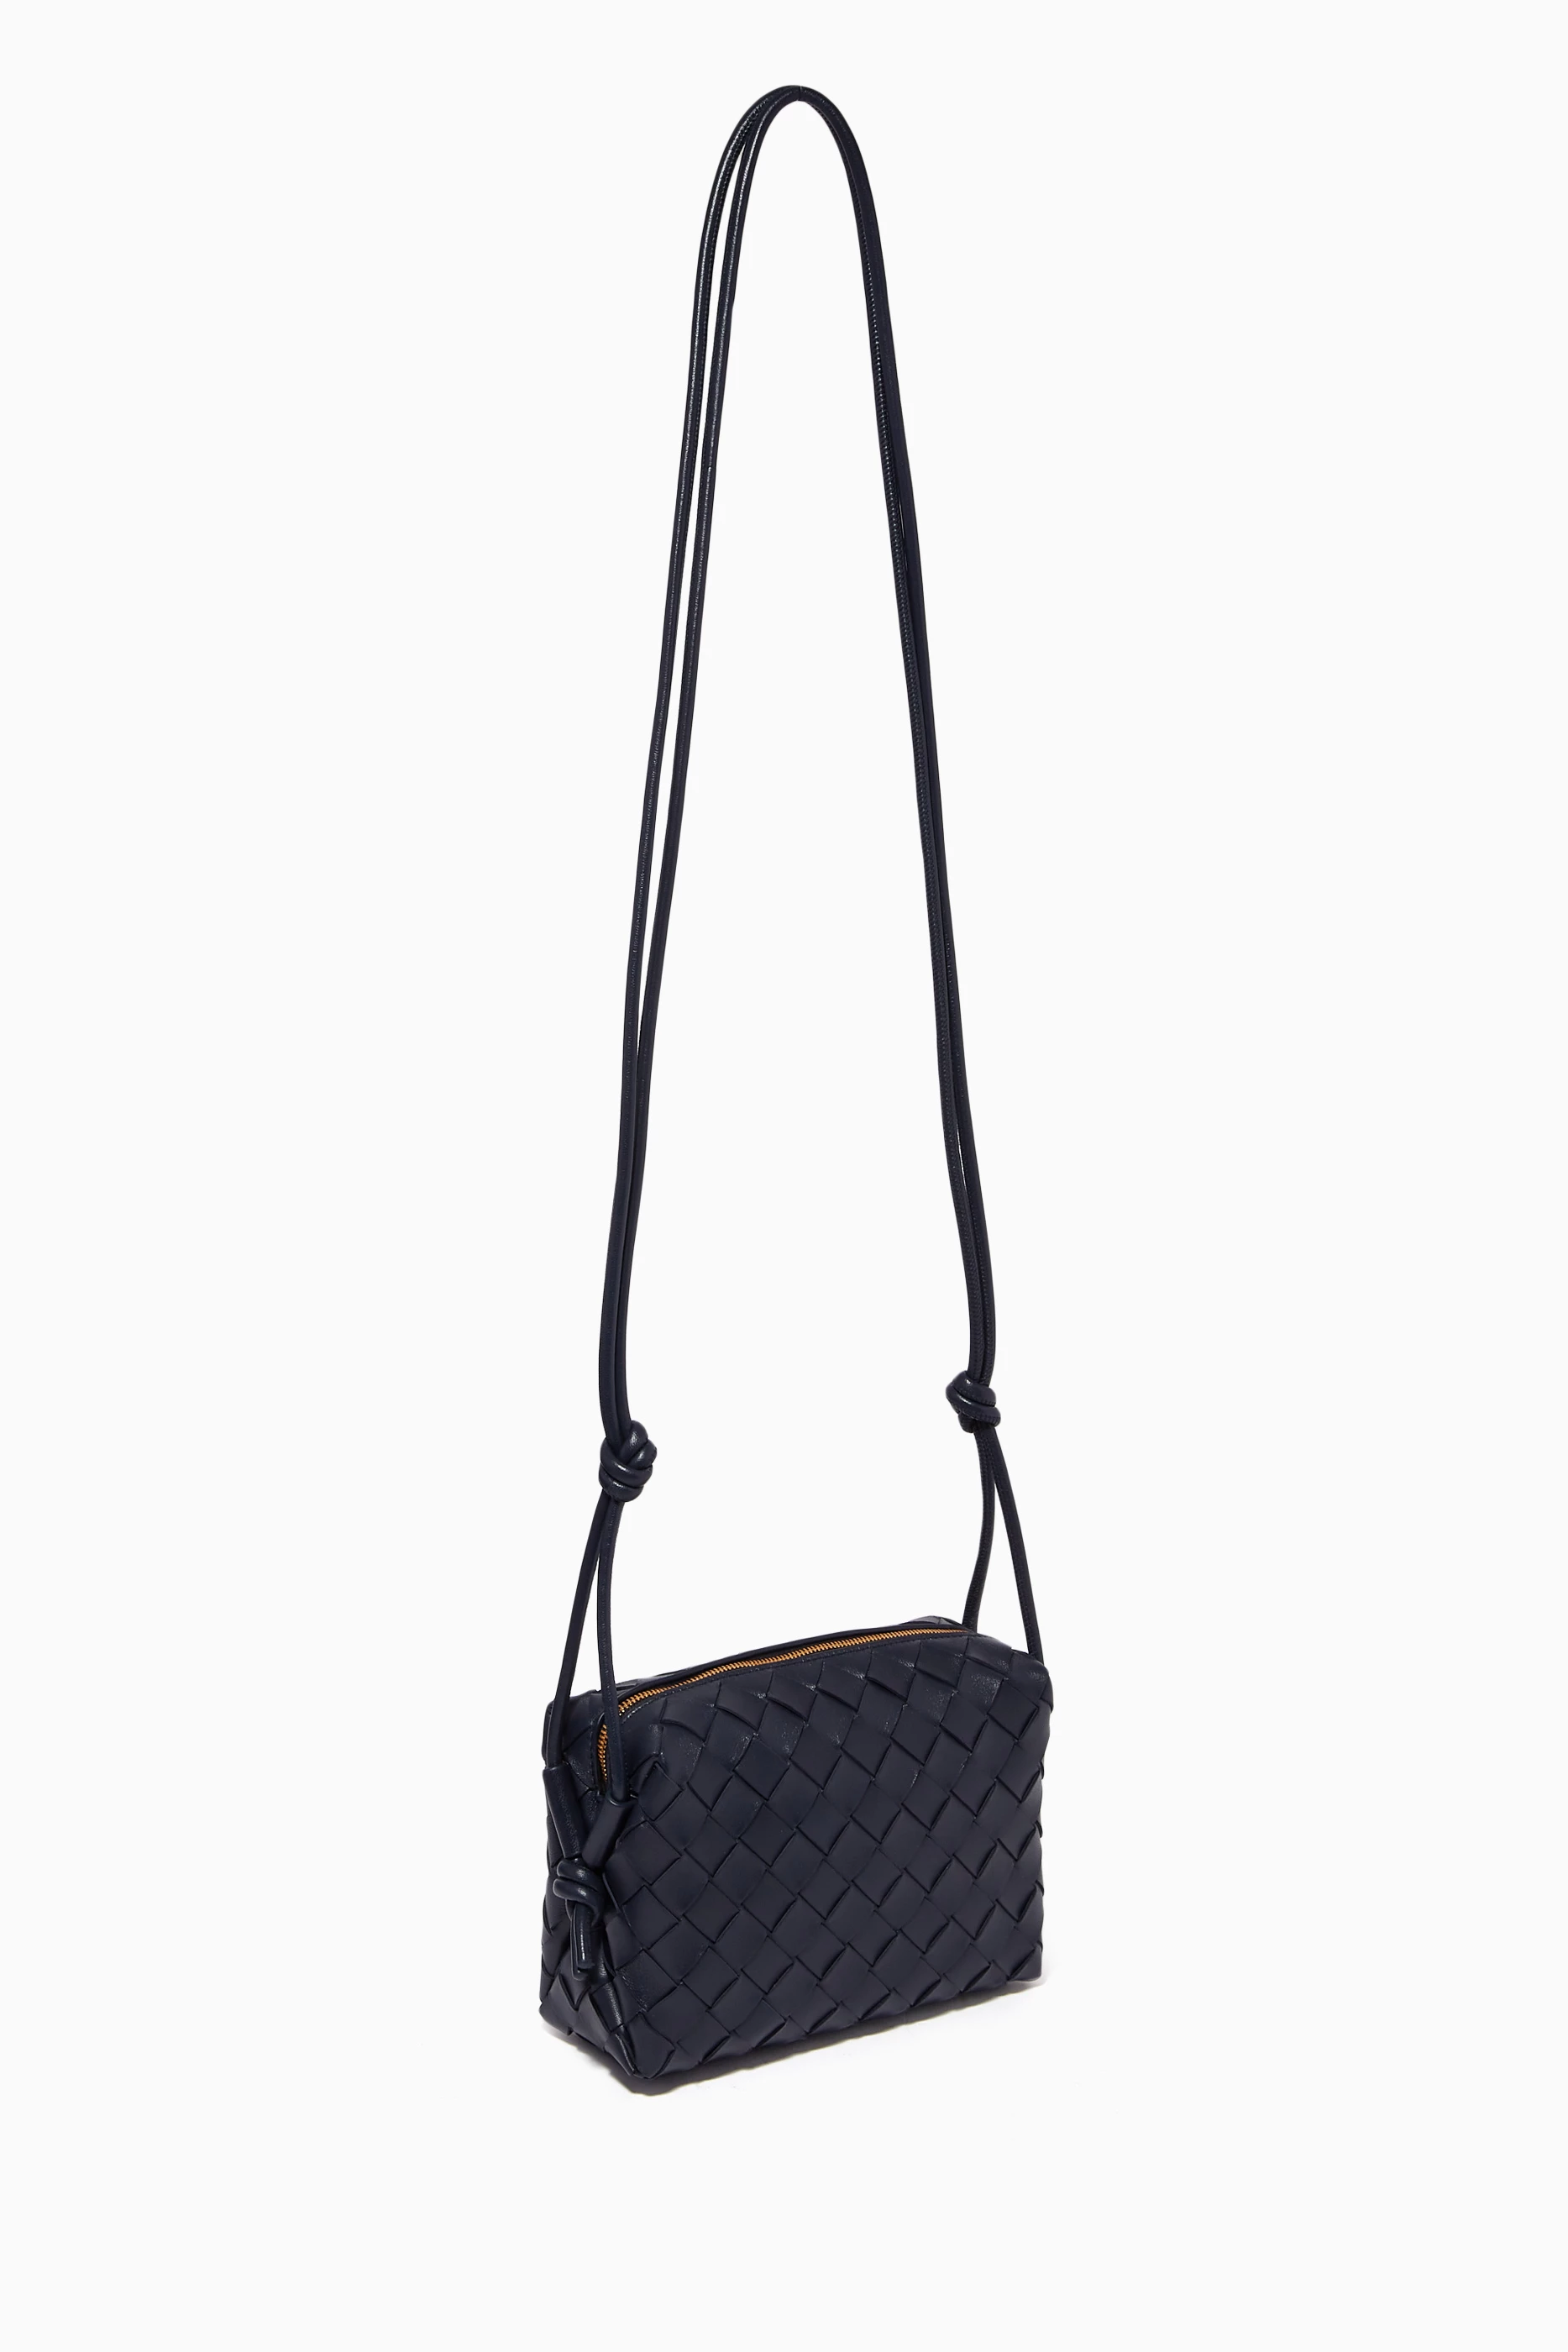 Bottega Veneta® Women's Mini Loop Camera Bag in Macaroon. Shop online now.